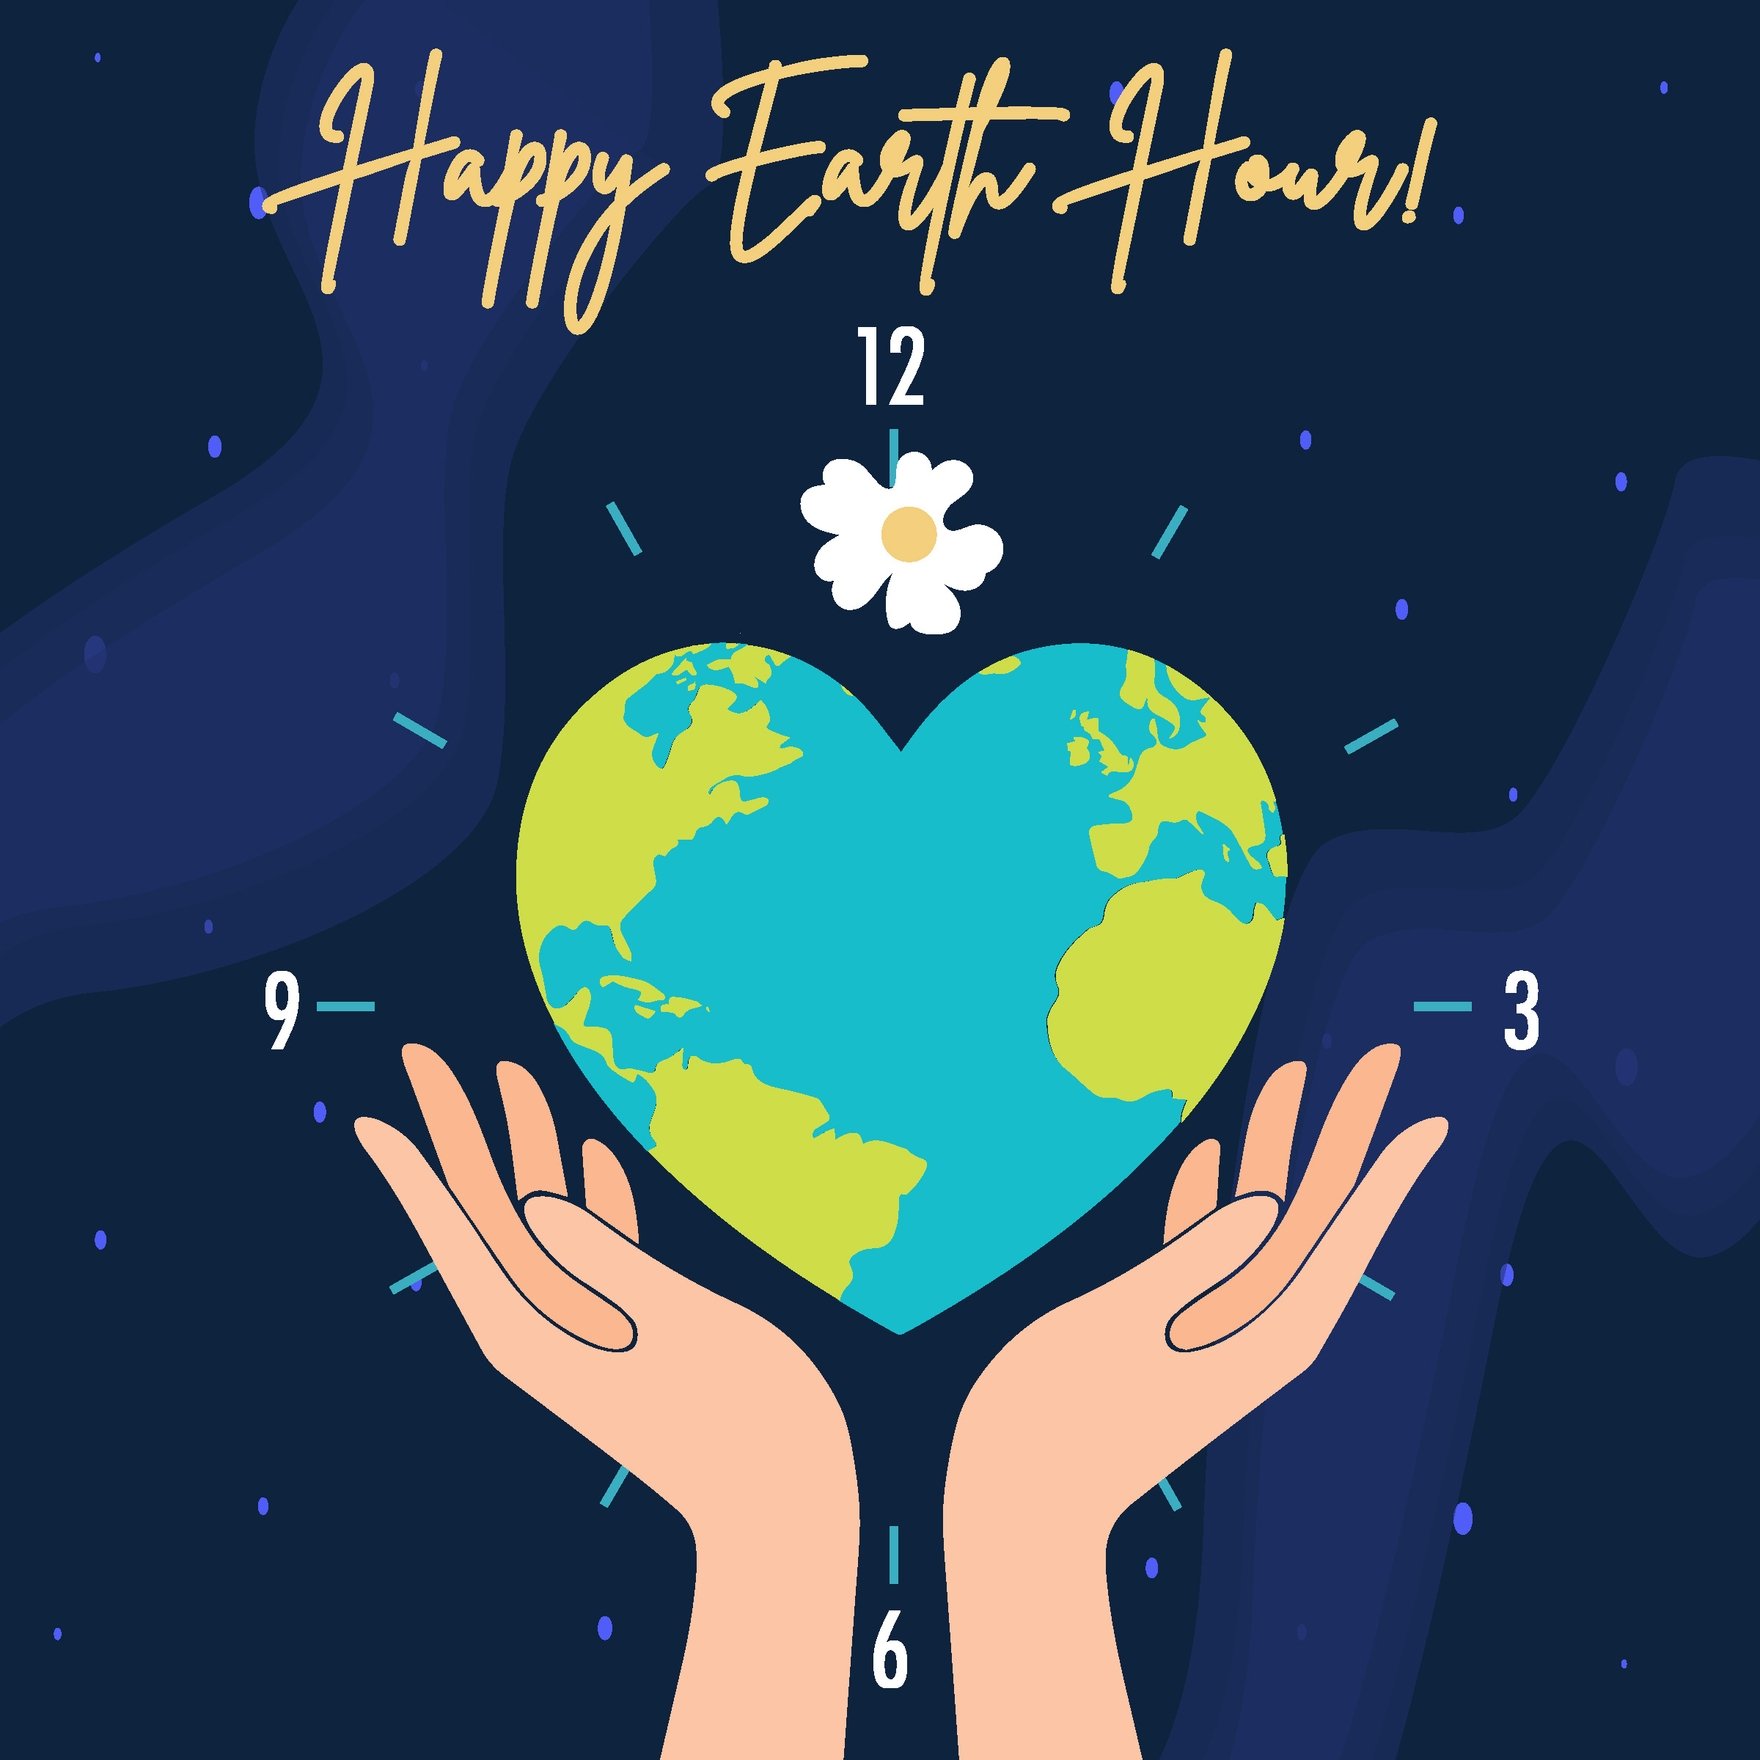 Happy Earth Hour Illustration in Illustrator, PSD, EPS, SVG, JPG, PNG